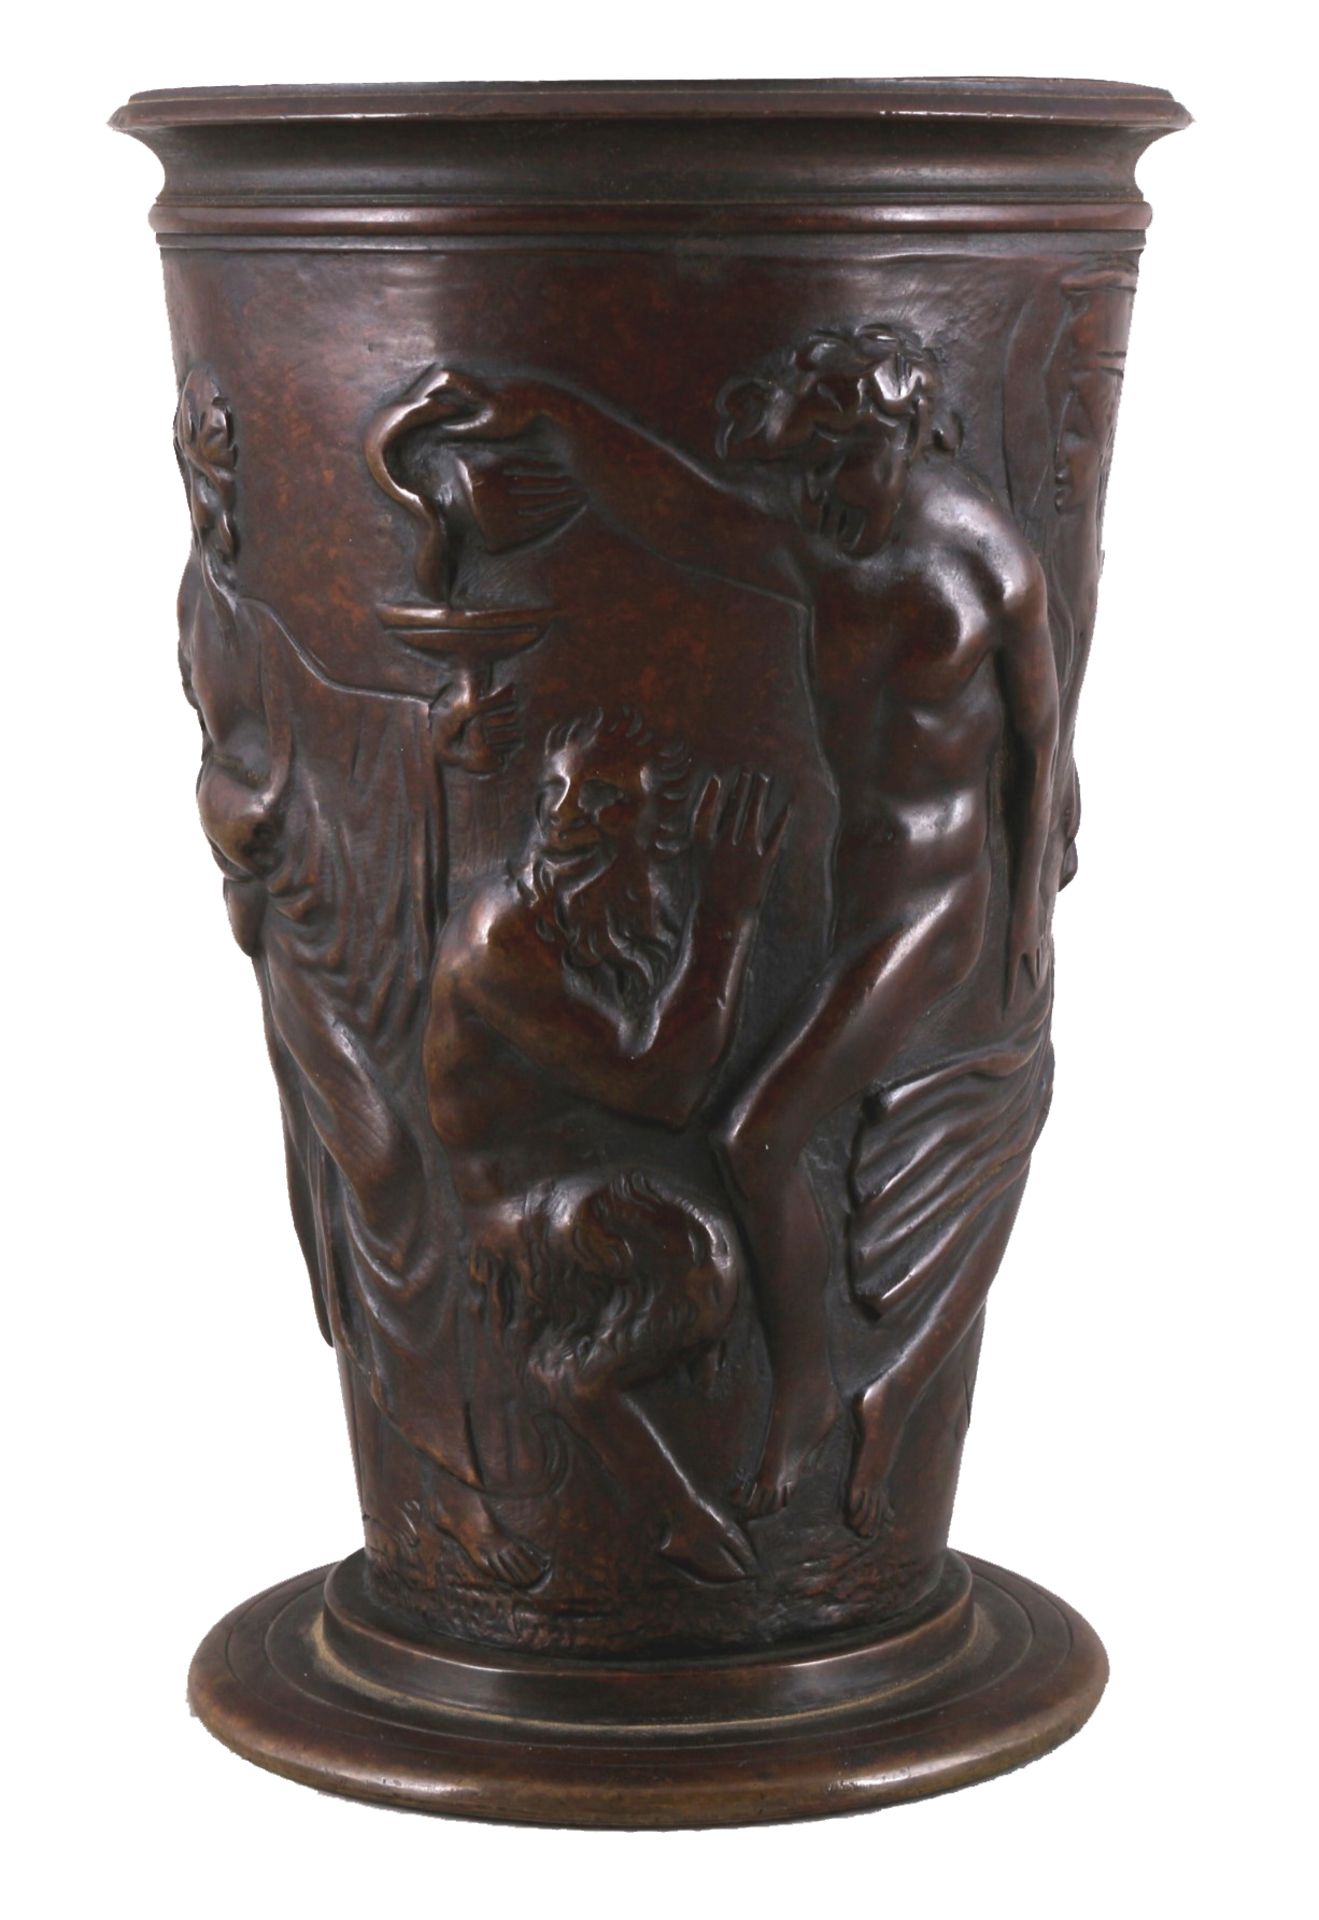 Bronze cup 19th century, mythological scenery, Bronzebecher mit mythologischer Szenerie,